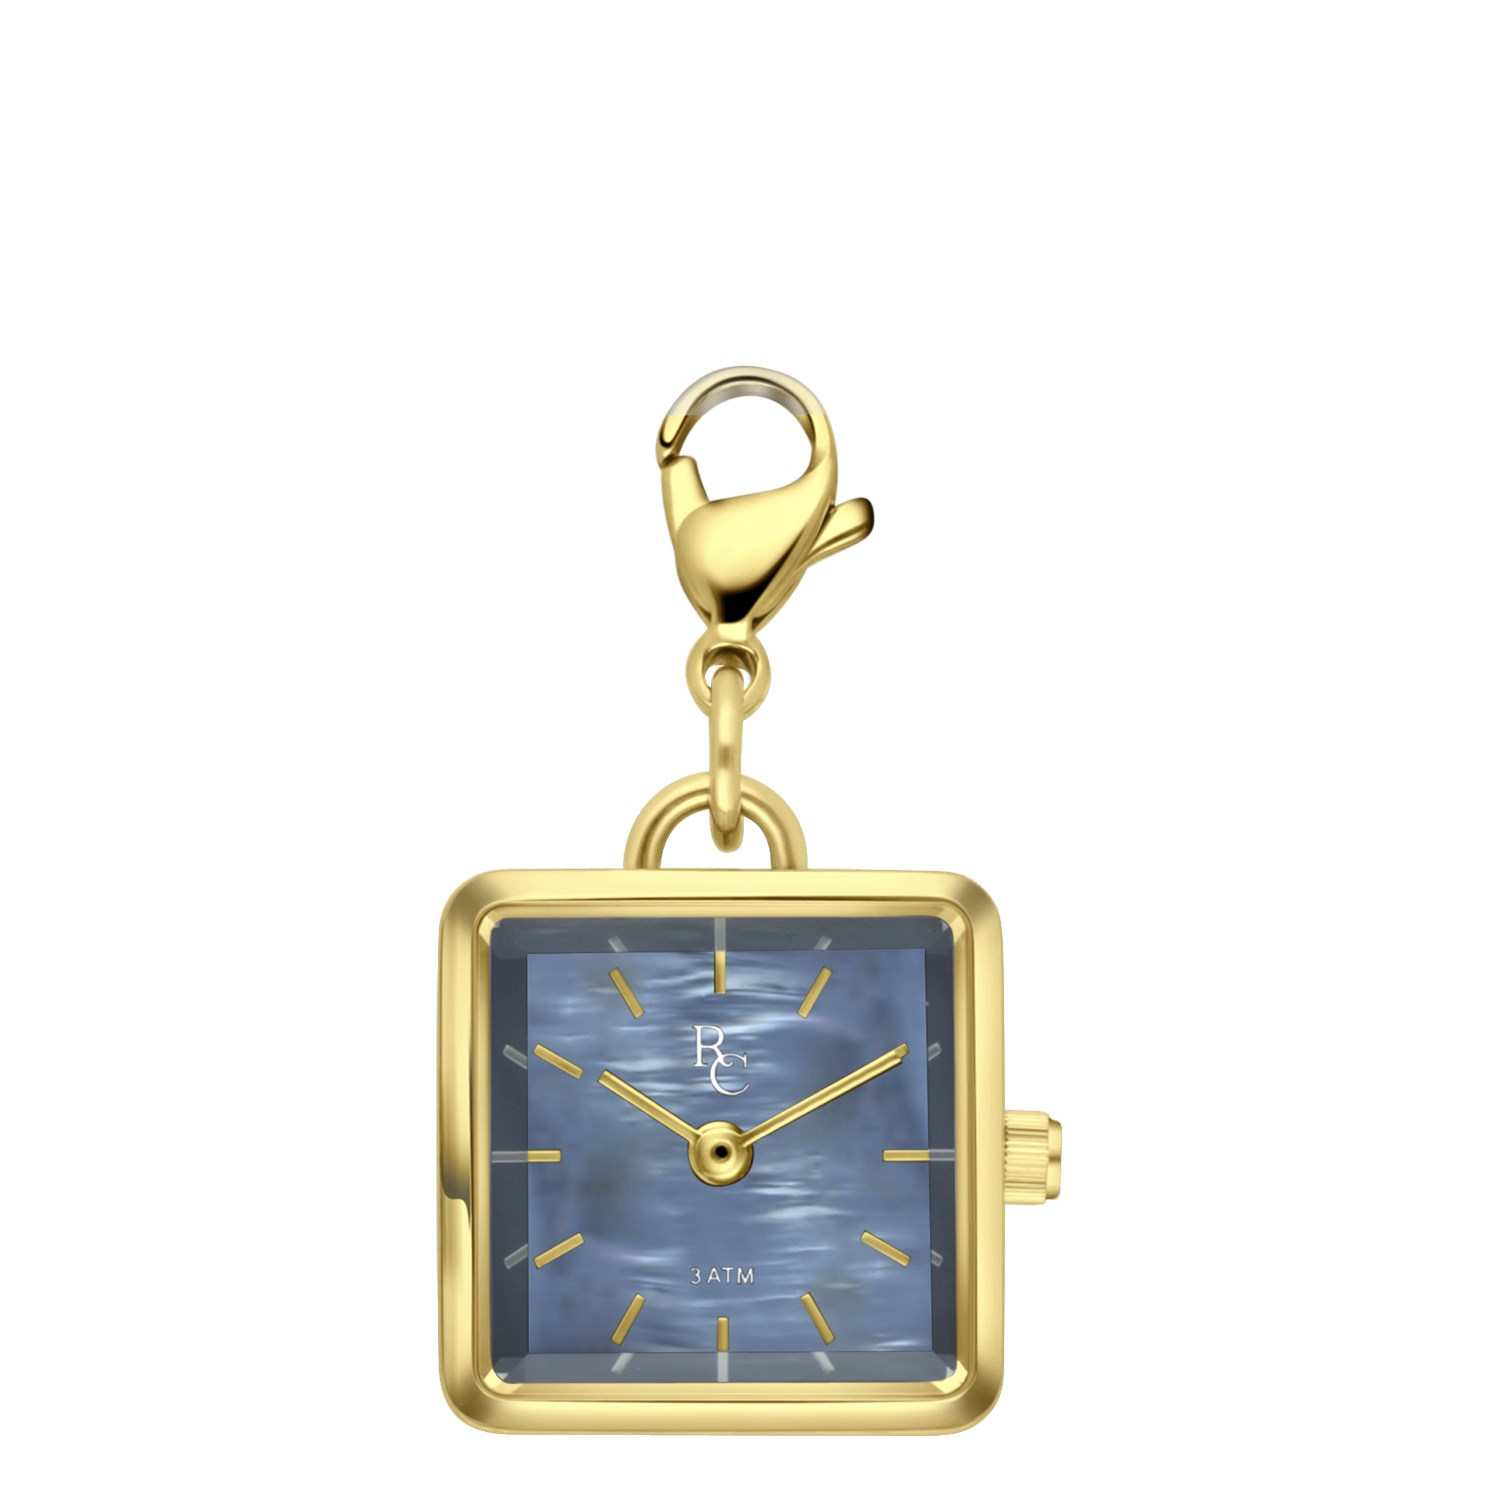 Regal Collection dames horloge bedel